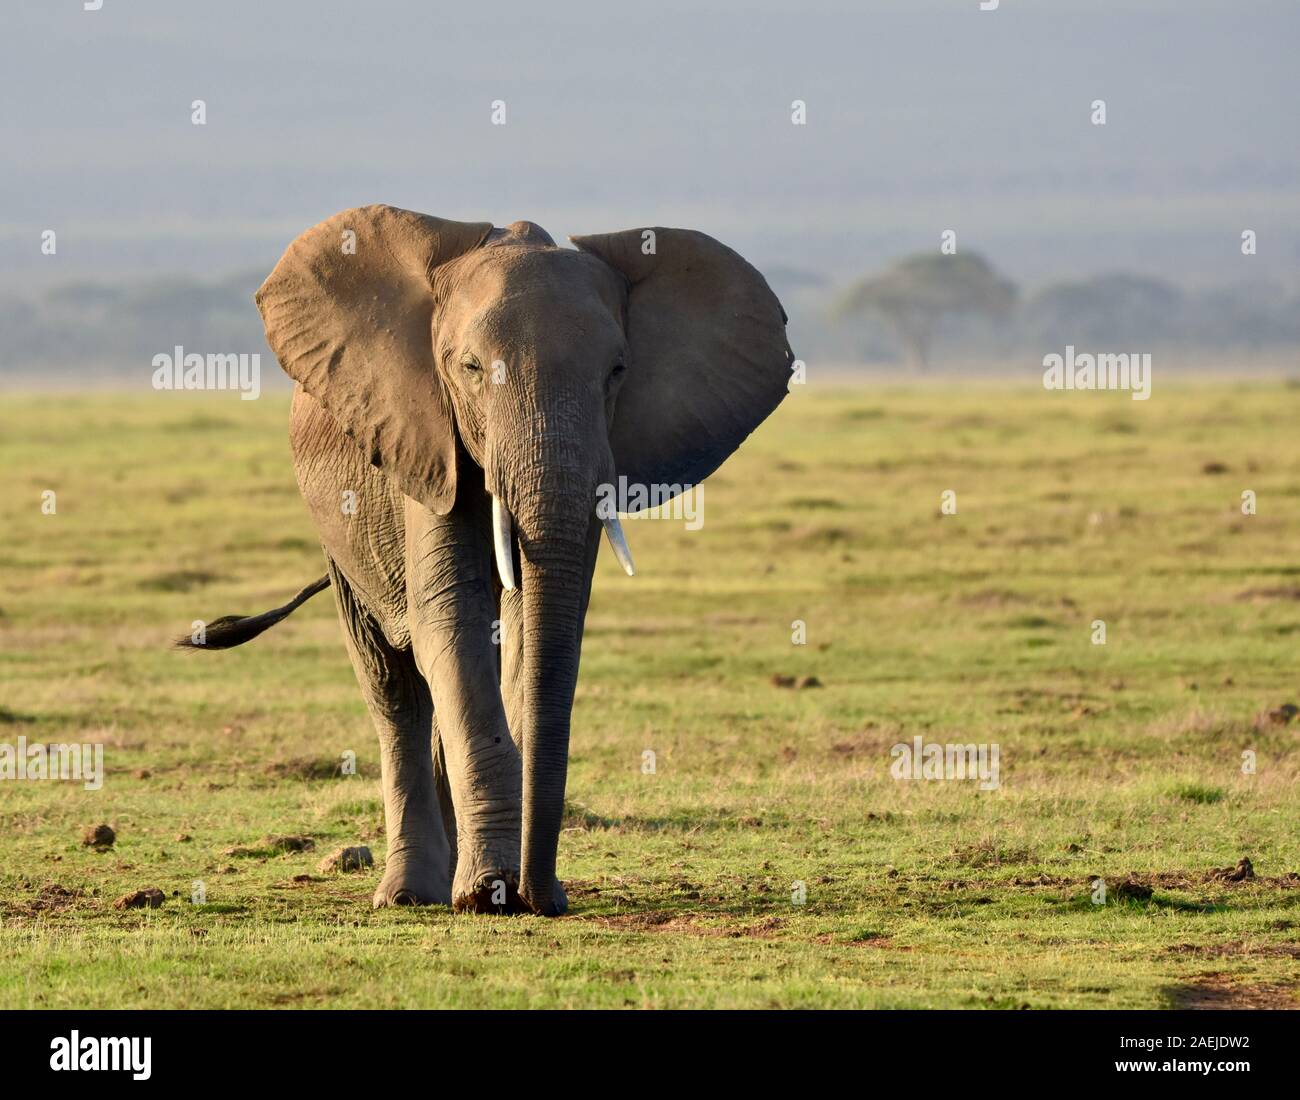 Elephant camminando lentamente sulla pianura erbosa con orecchie esteso. Copyspace. (Loxodonta africana) Foto Stock